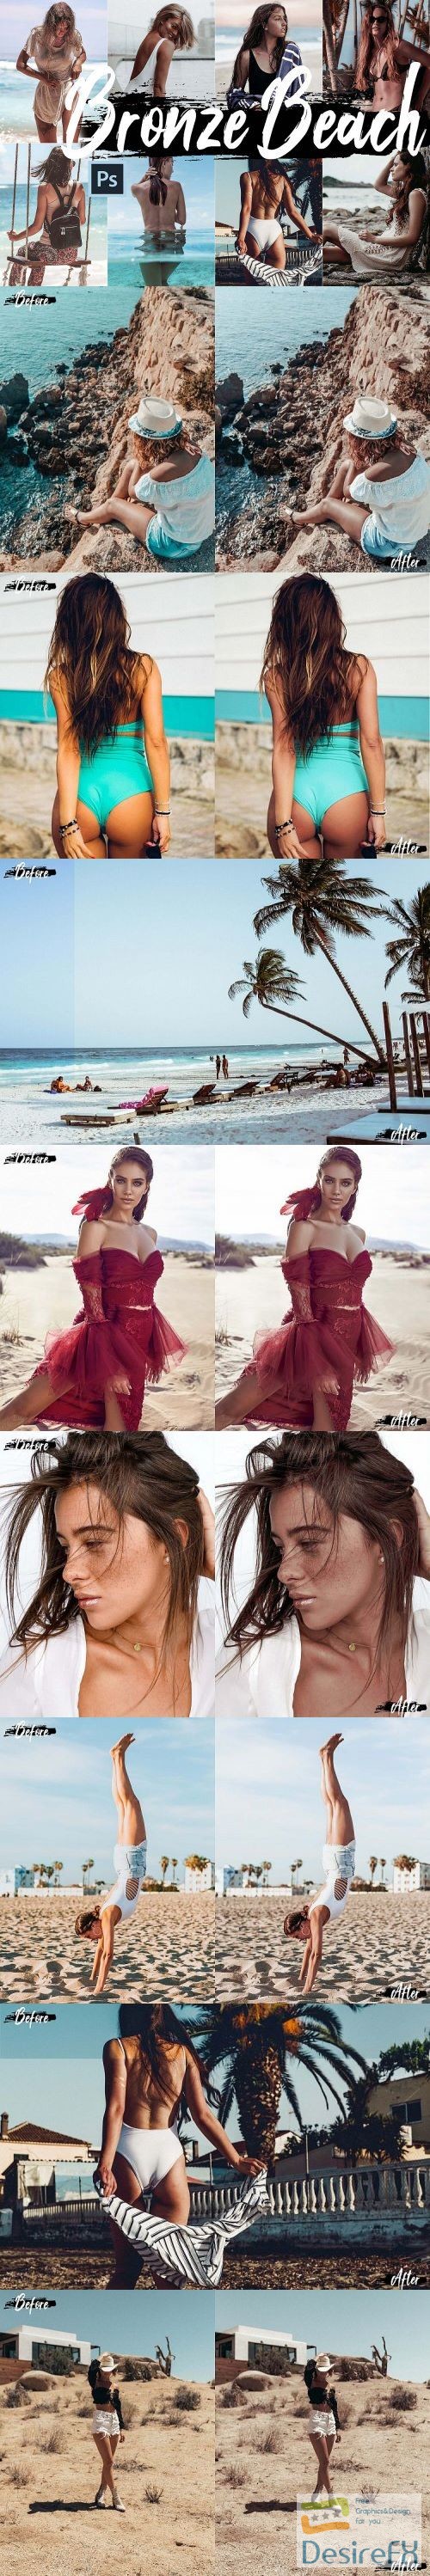 Neo Bronze Beach Color Grading photoshop actions, ACR LUT - 272496